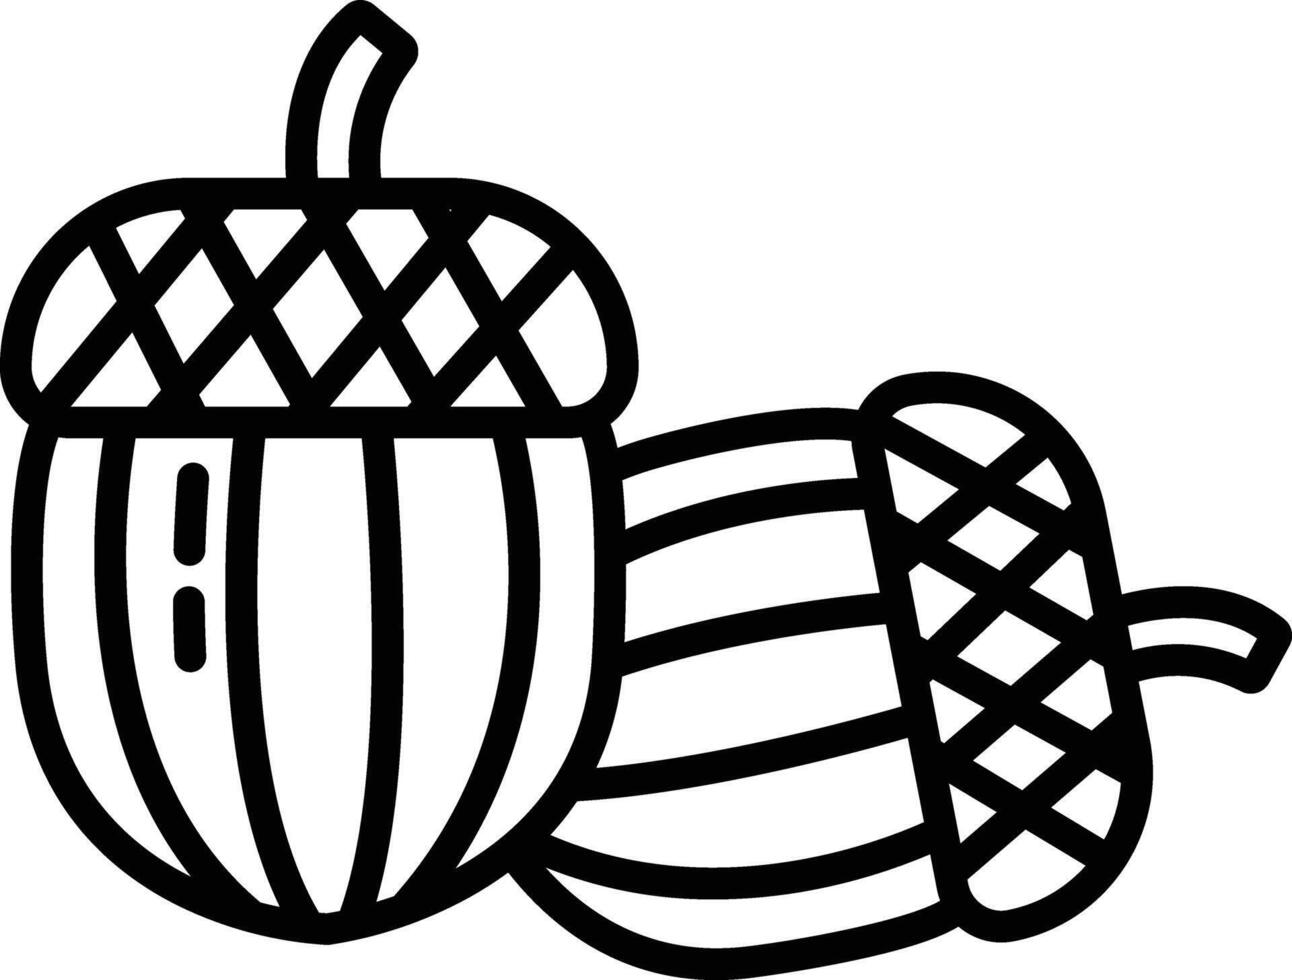 acorn outline illustration vector